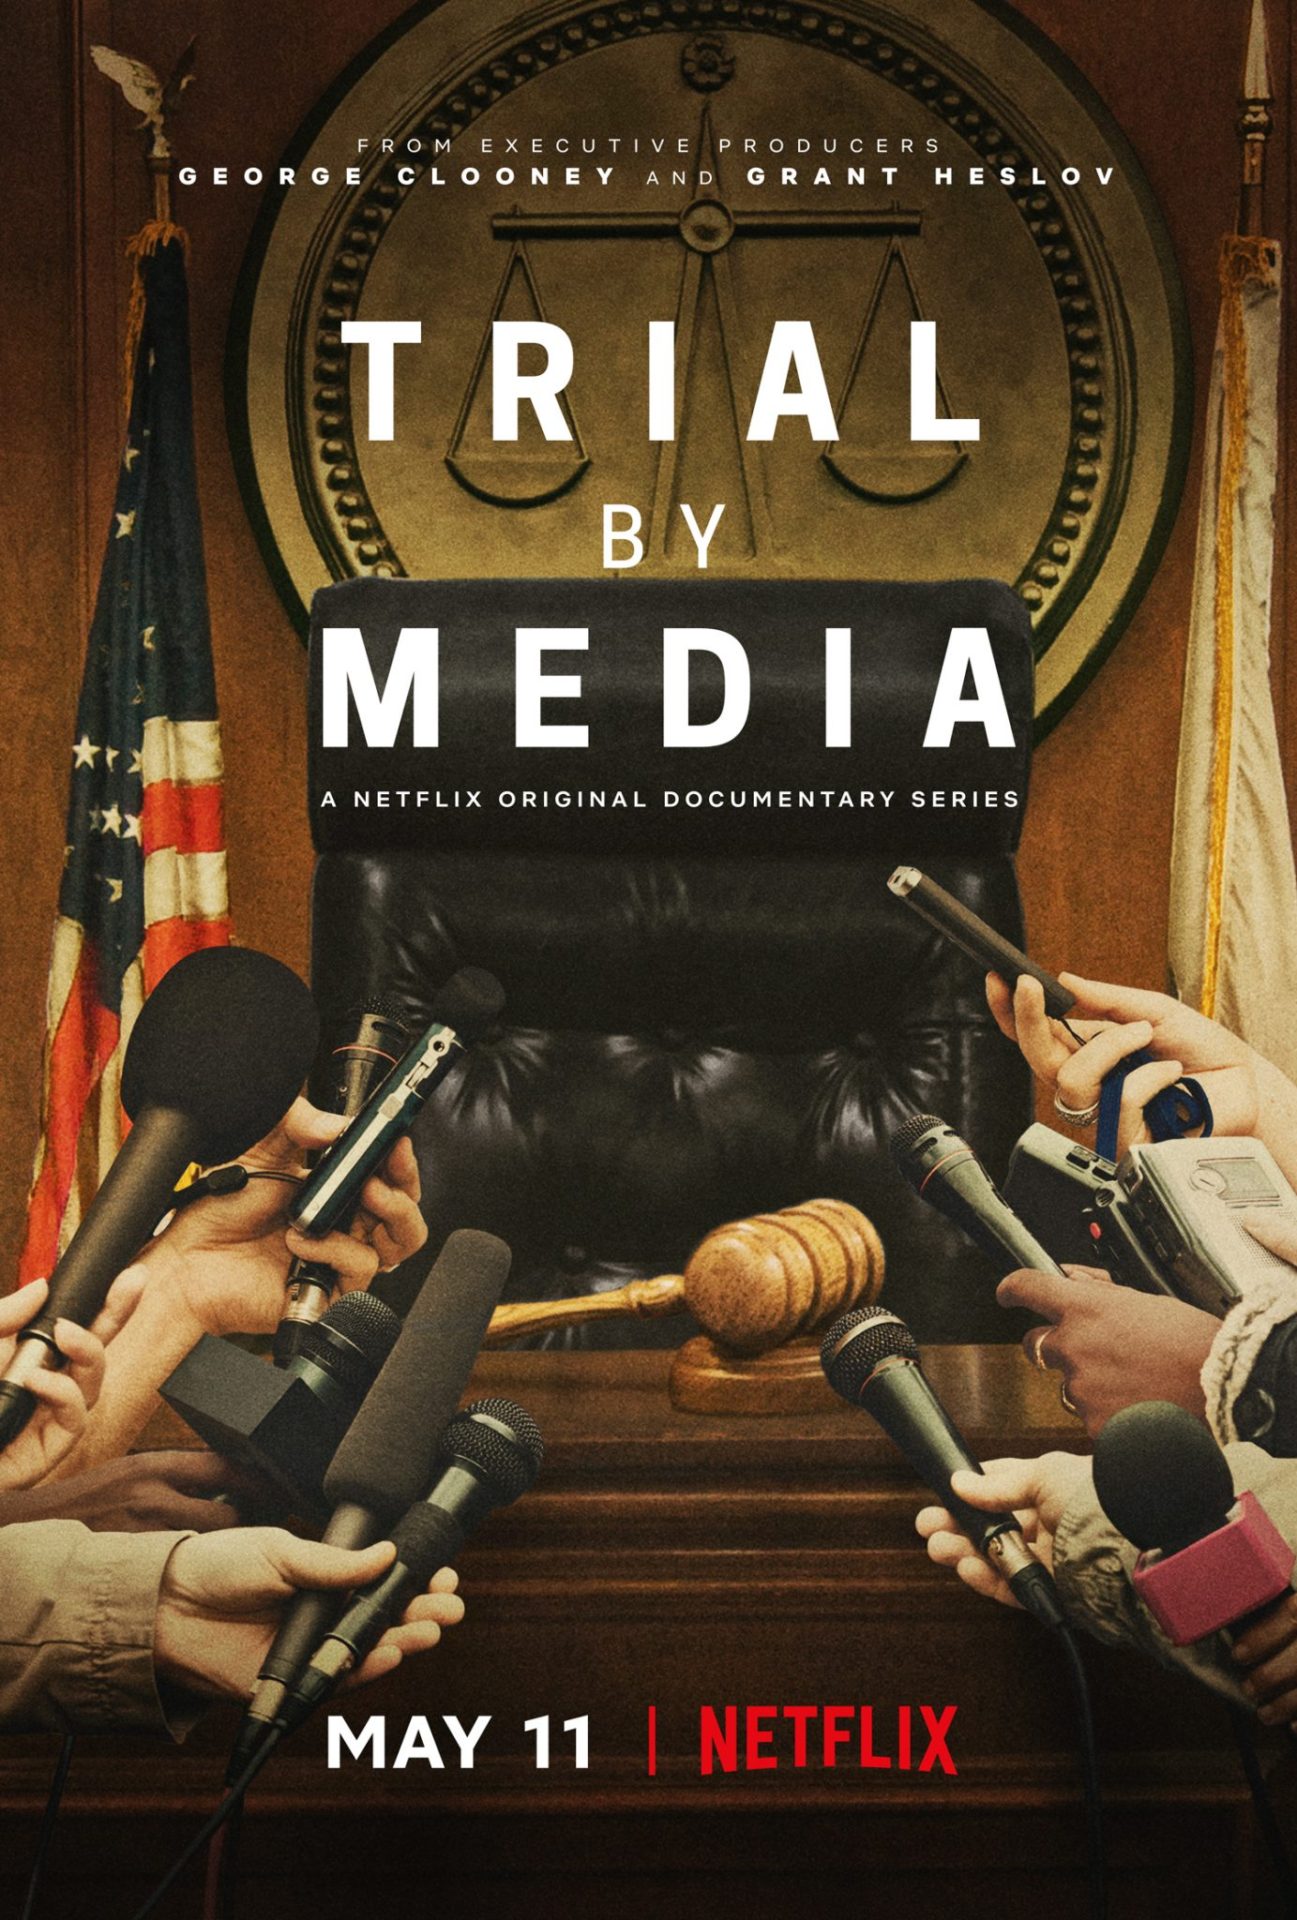 trial by media case study